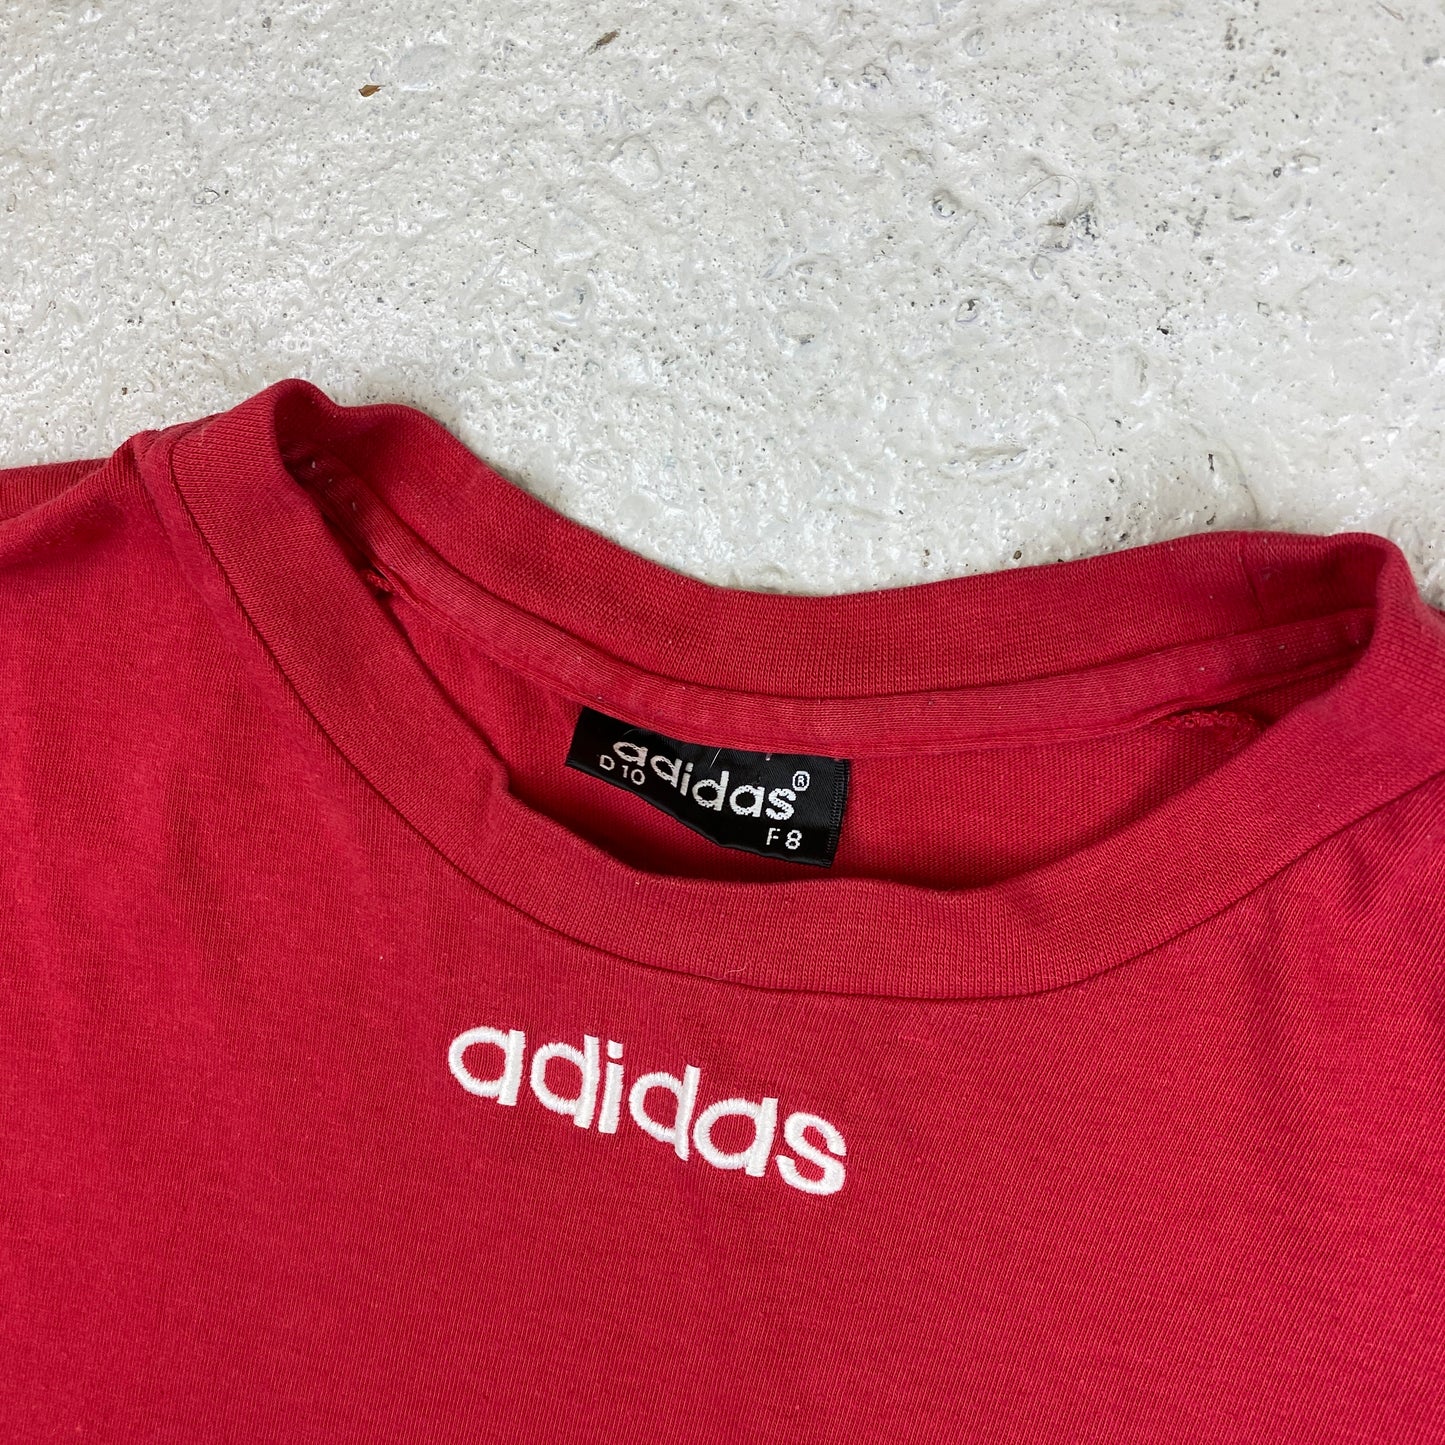 Adidas RARE heavyweight embroidered t-shirt (L-XL)